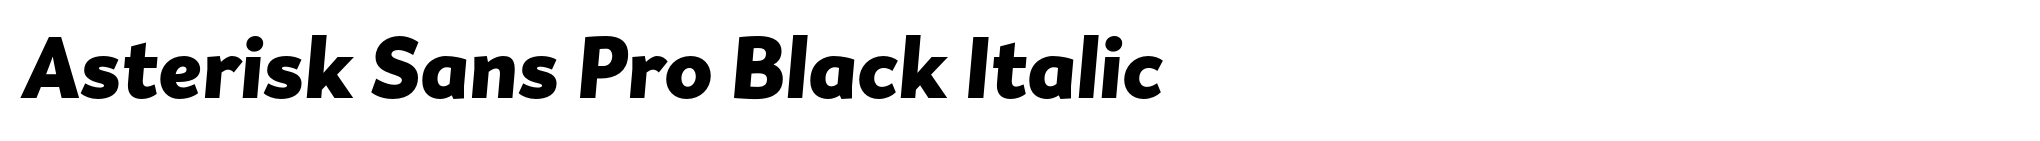 Asterisk Sans Pro Black Italic image